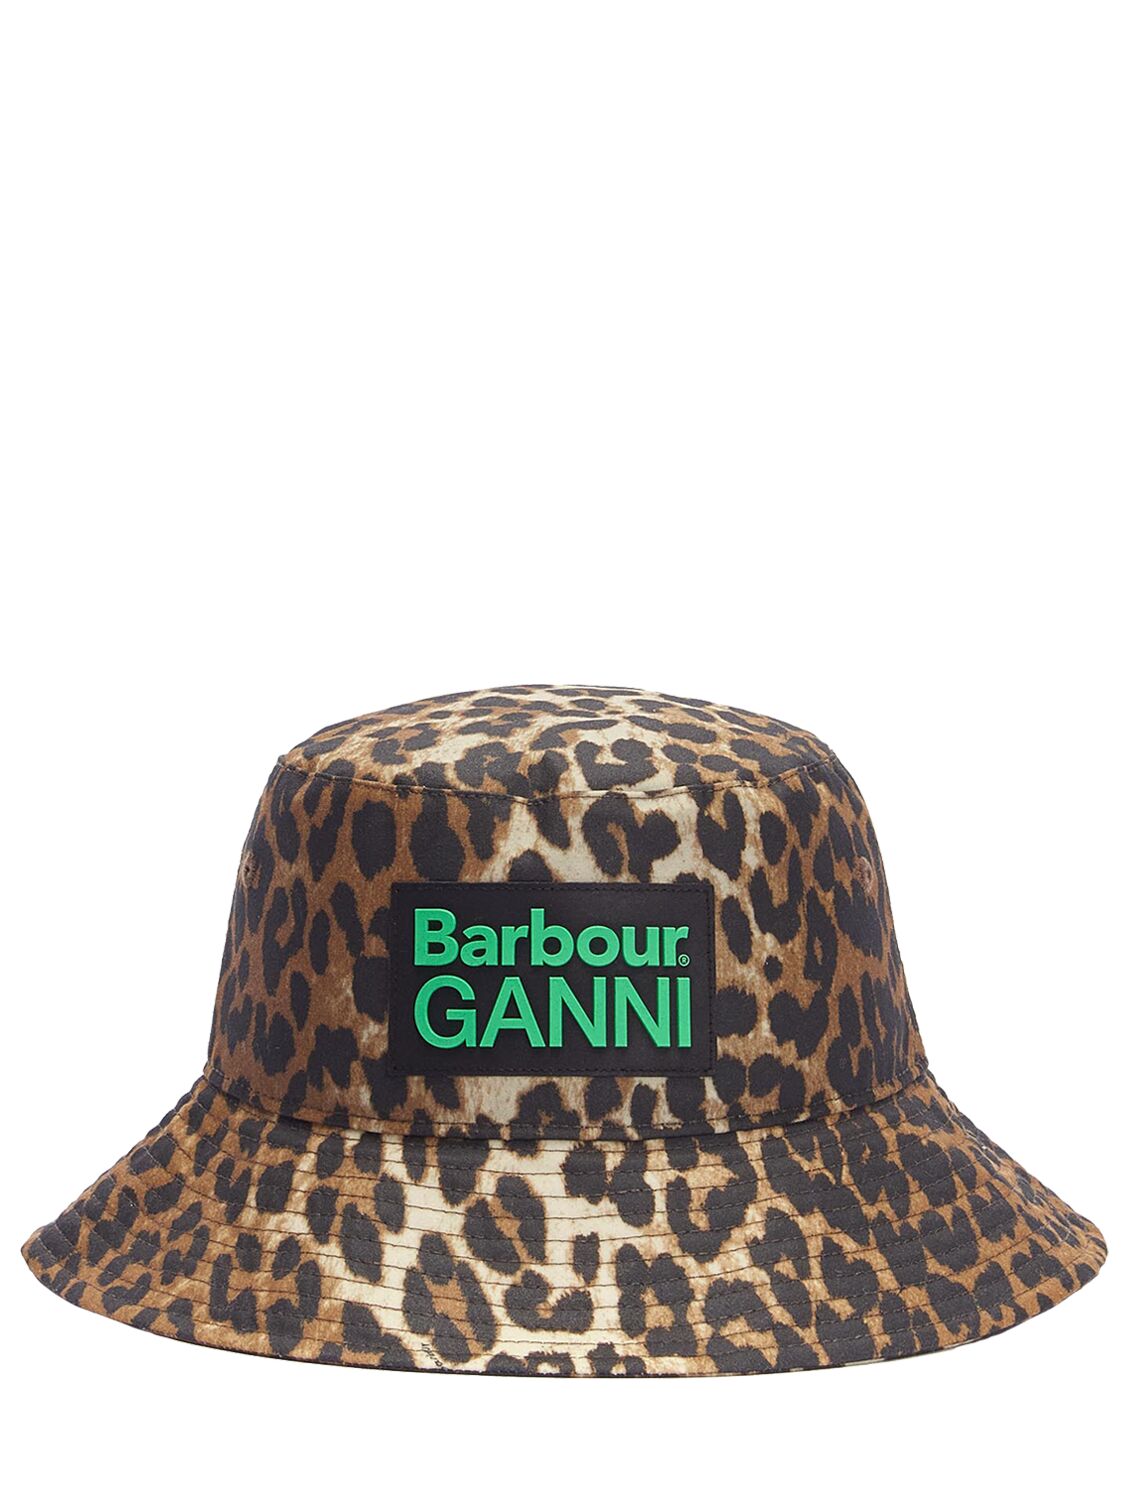 Barbour X Ganni Leo Print Cotton Hat In Brown